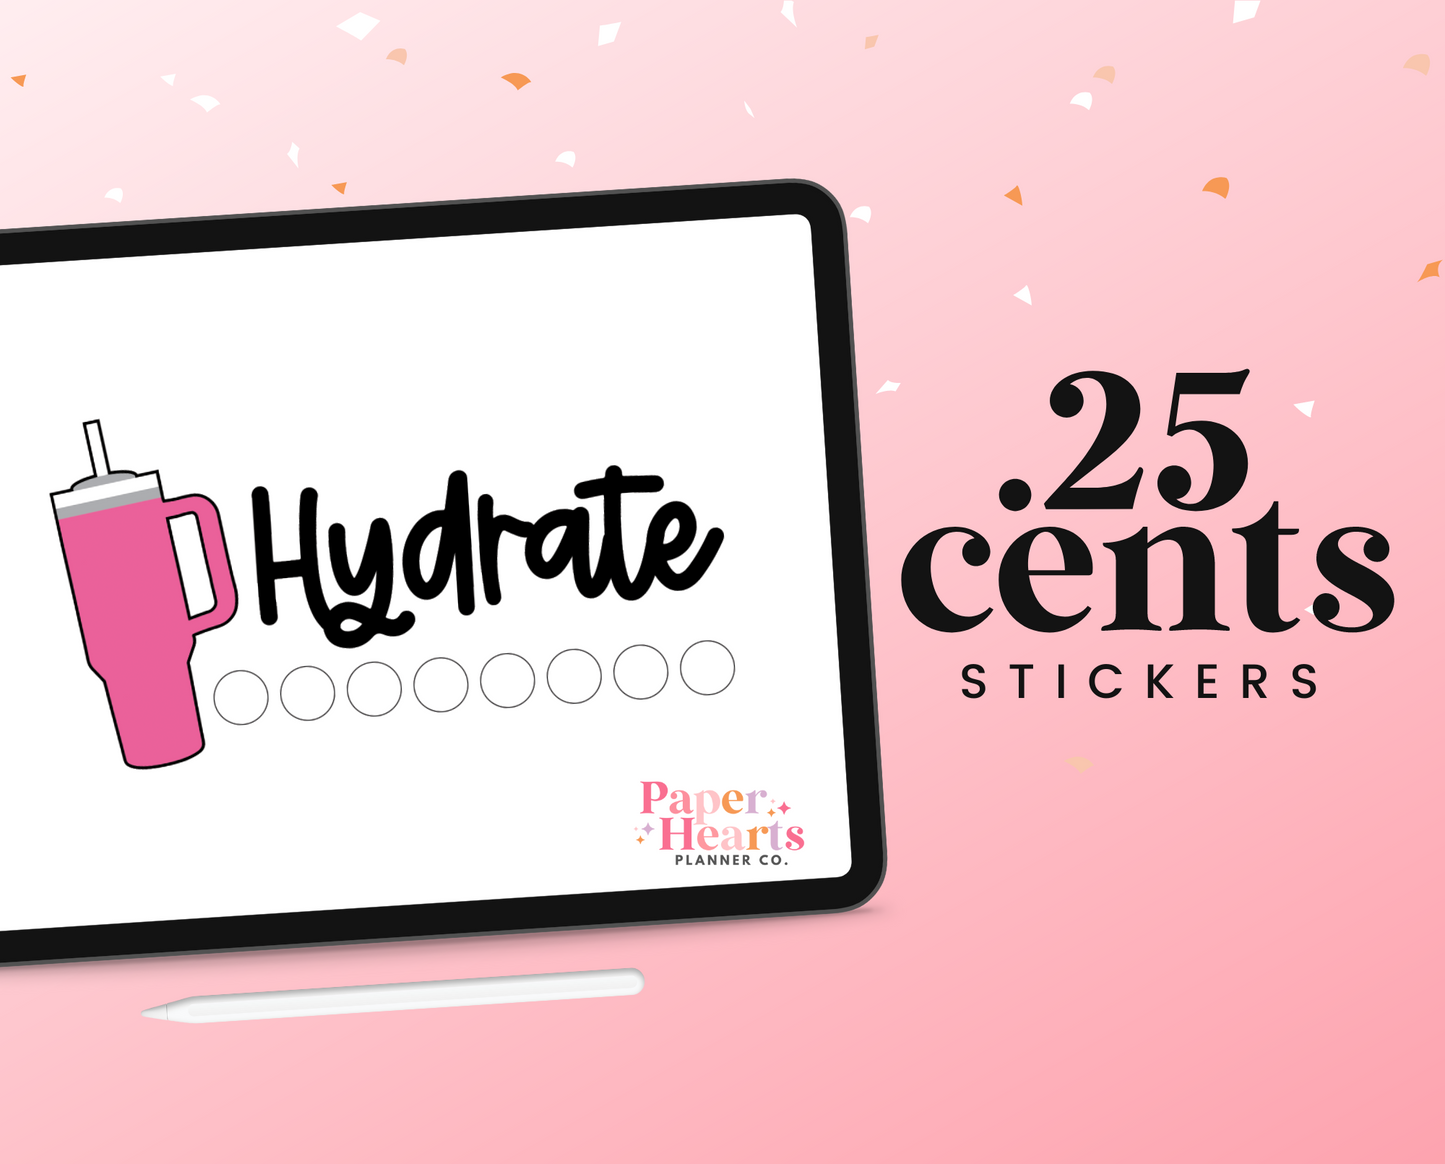 Hydrate Stanley Digital Sticker